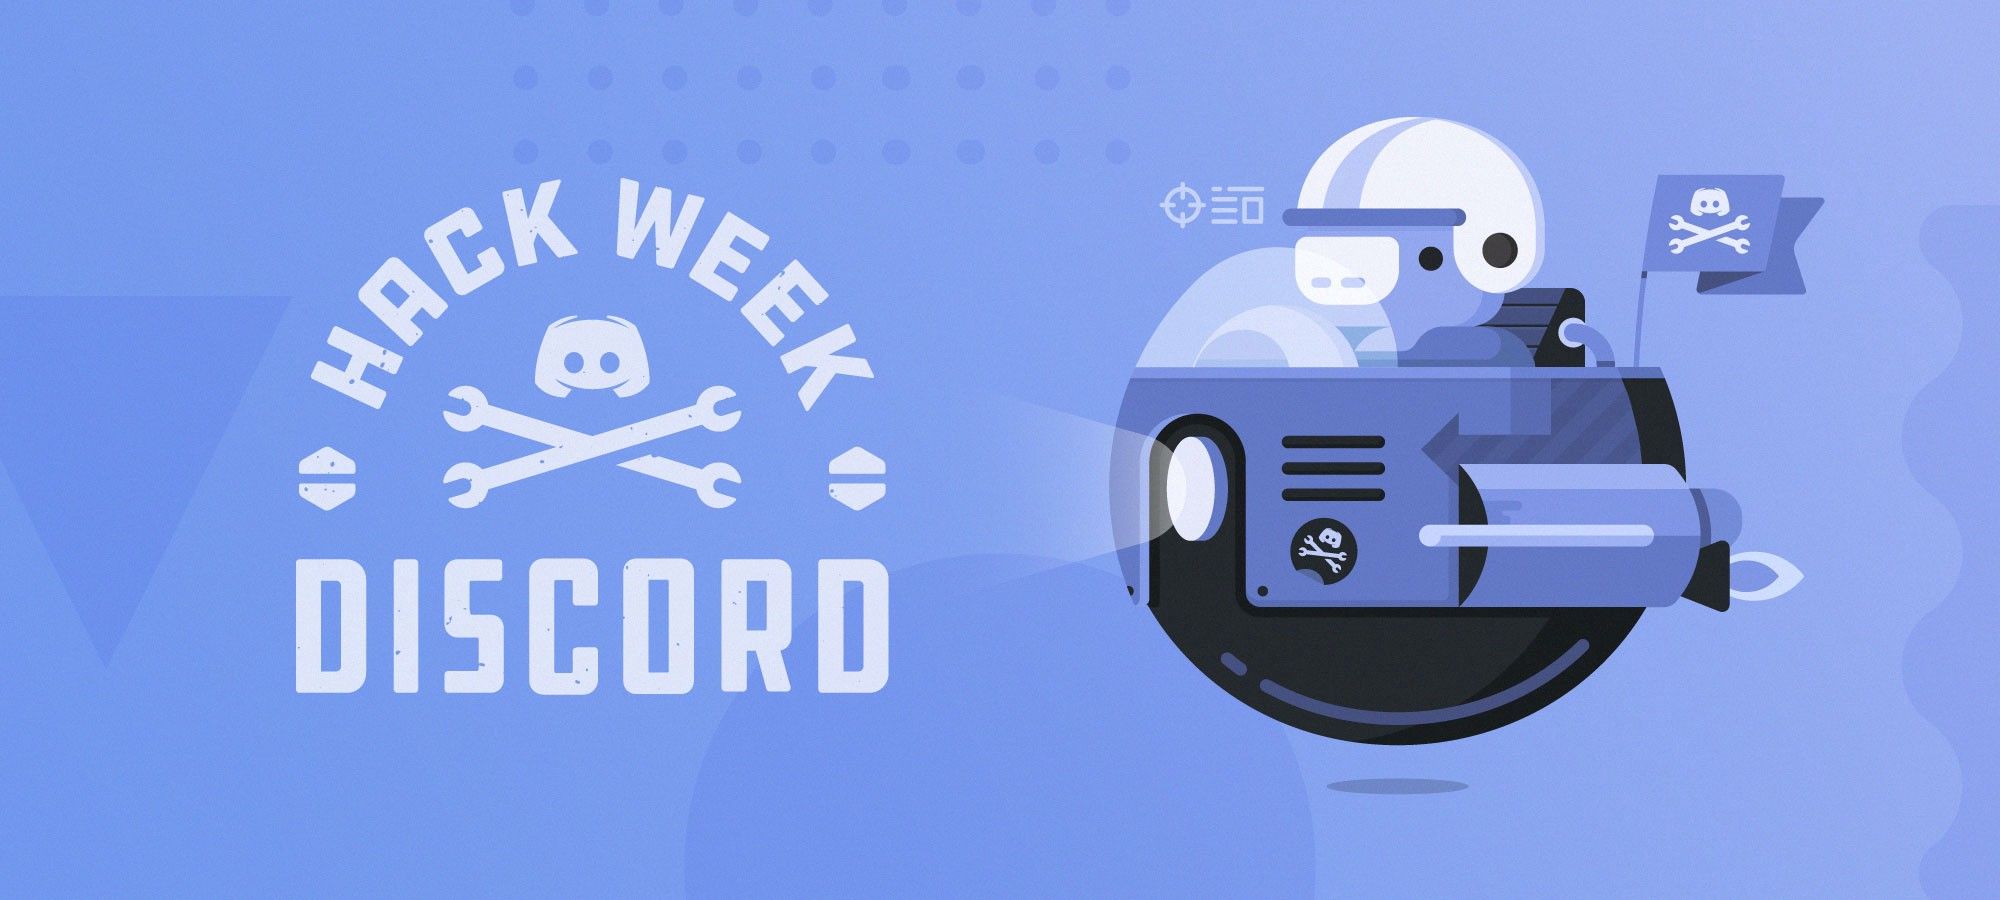 Discord Community Hack Week Winners .blog.discord.com